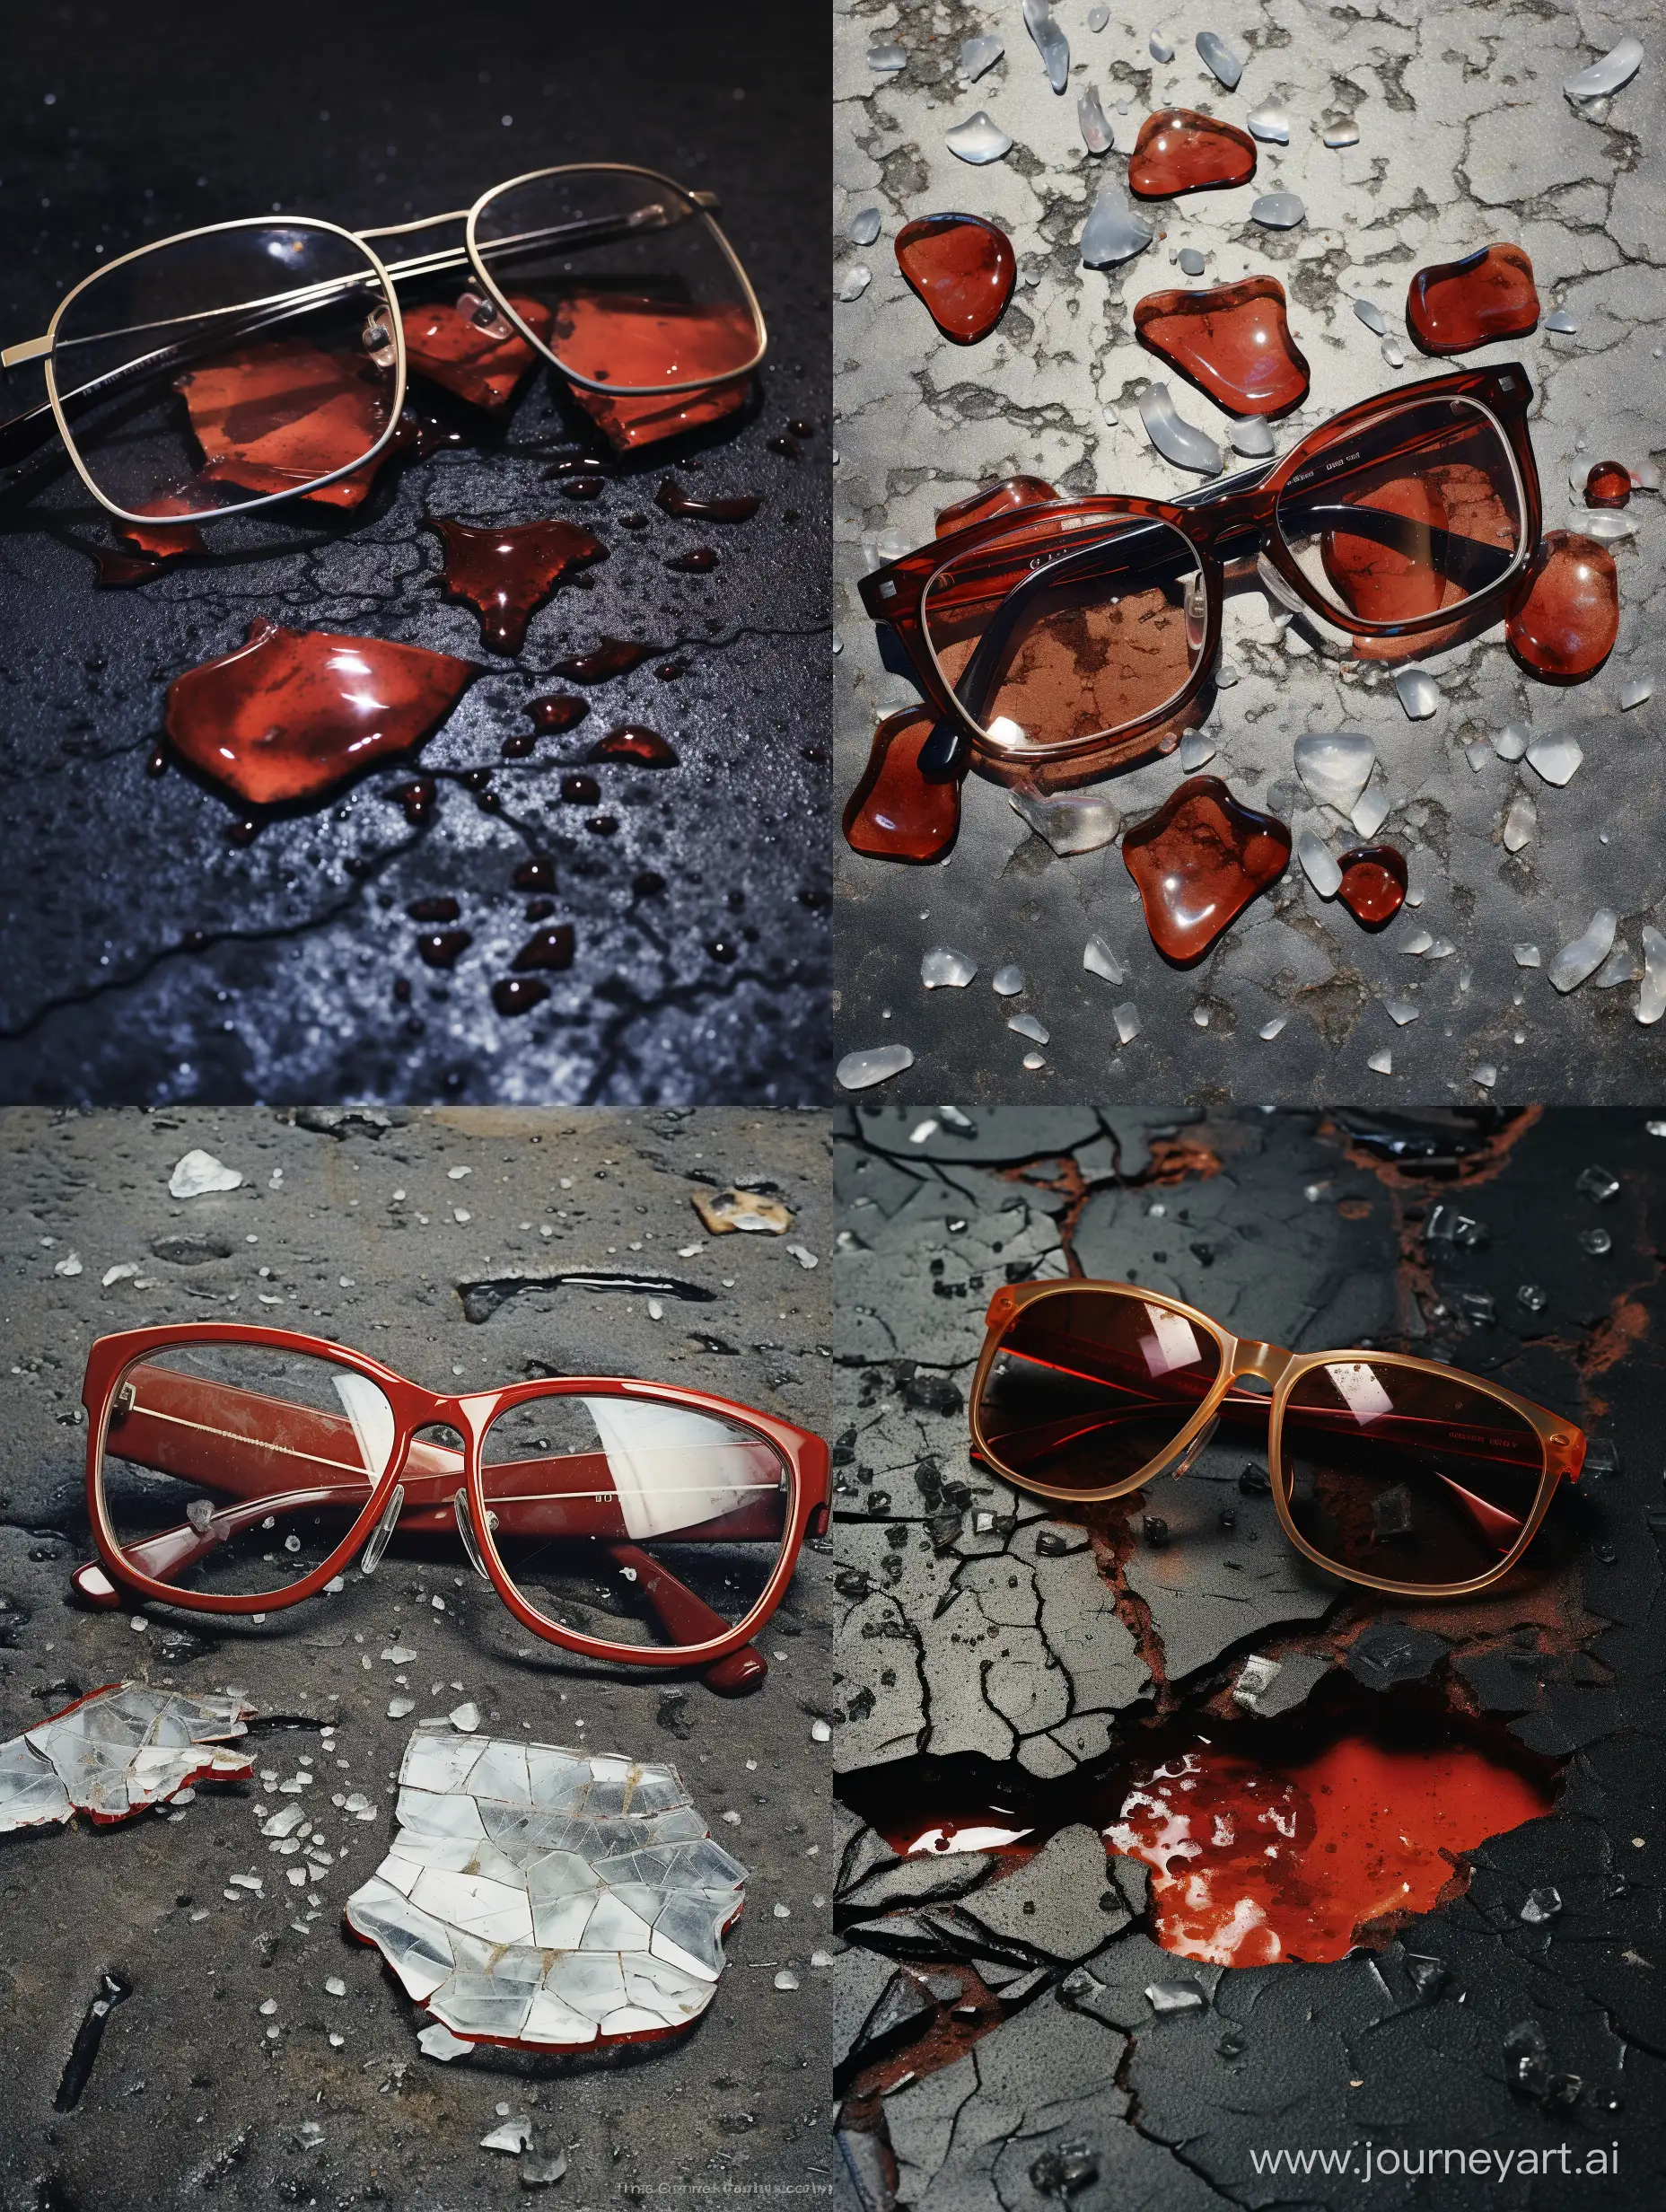 Mysterious-Scene-BloodStained-Asphalt-and-WaxLike-Glasses